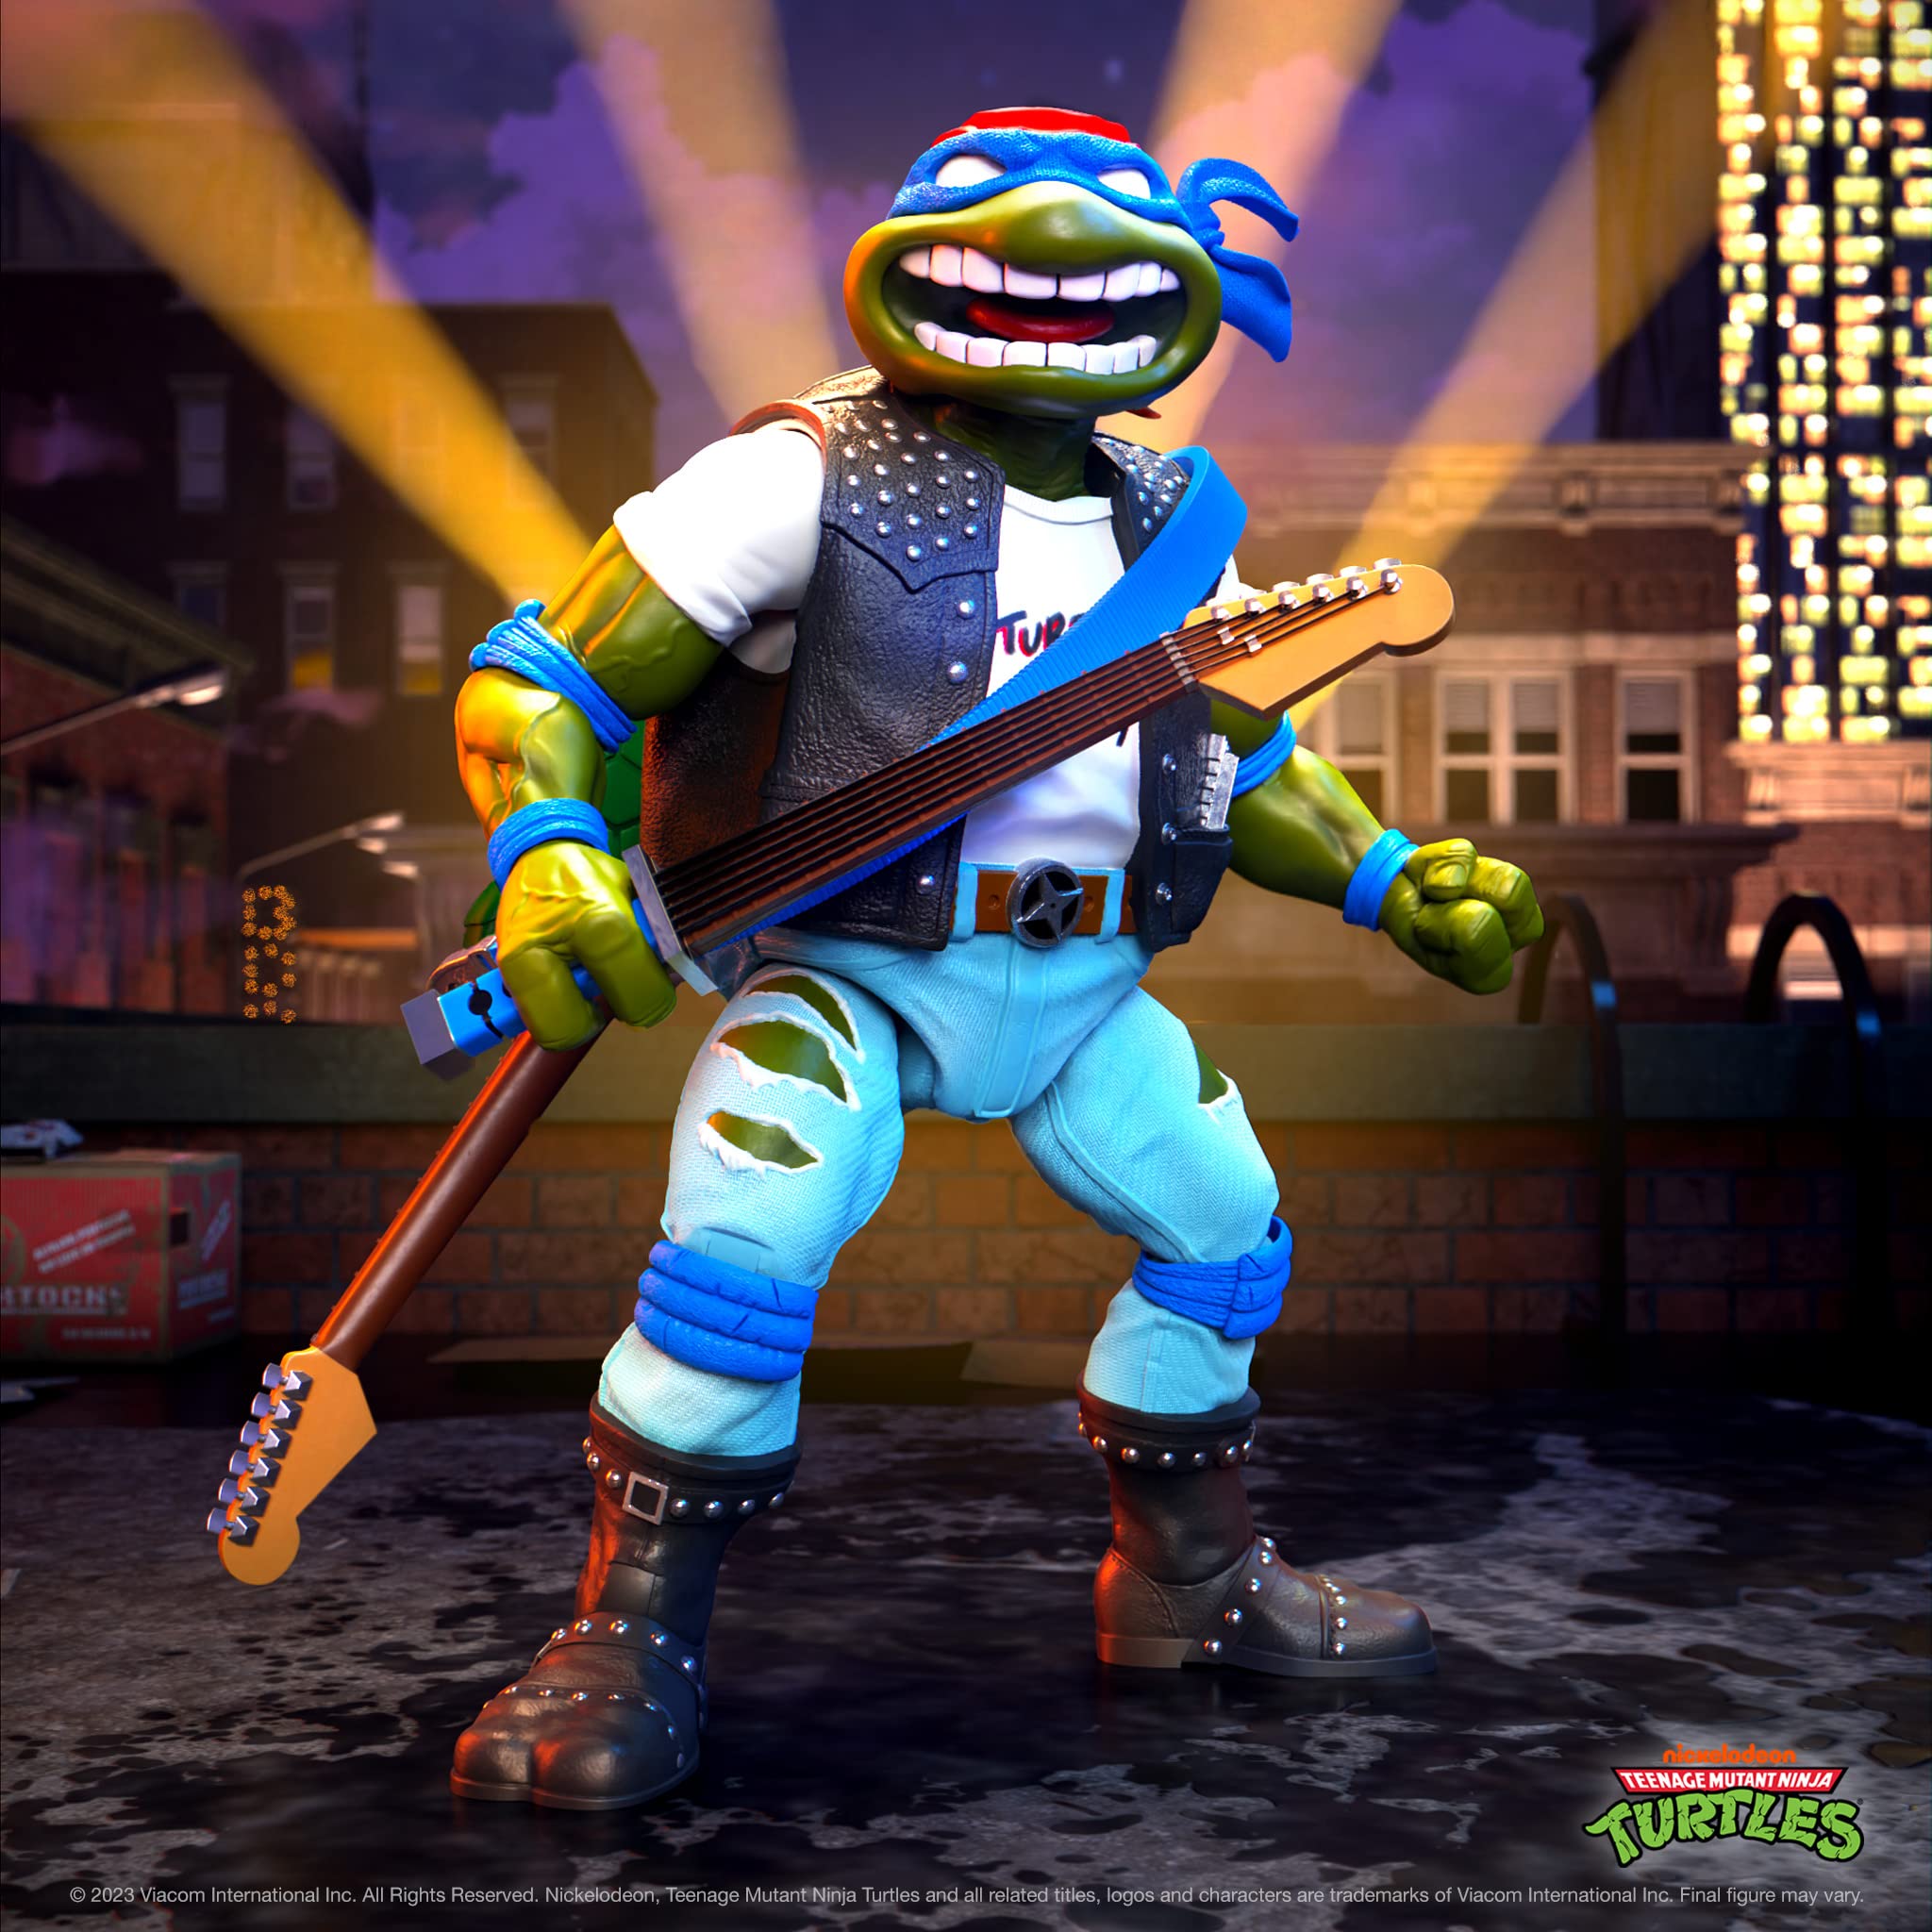 Super7 Teenage Mutant Ninja Turtles Classic Rocker Leo - ULTIMATES! 7 in Action Figure